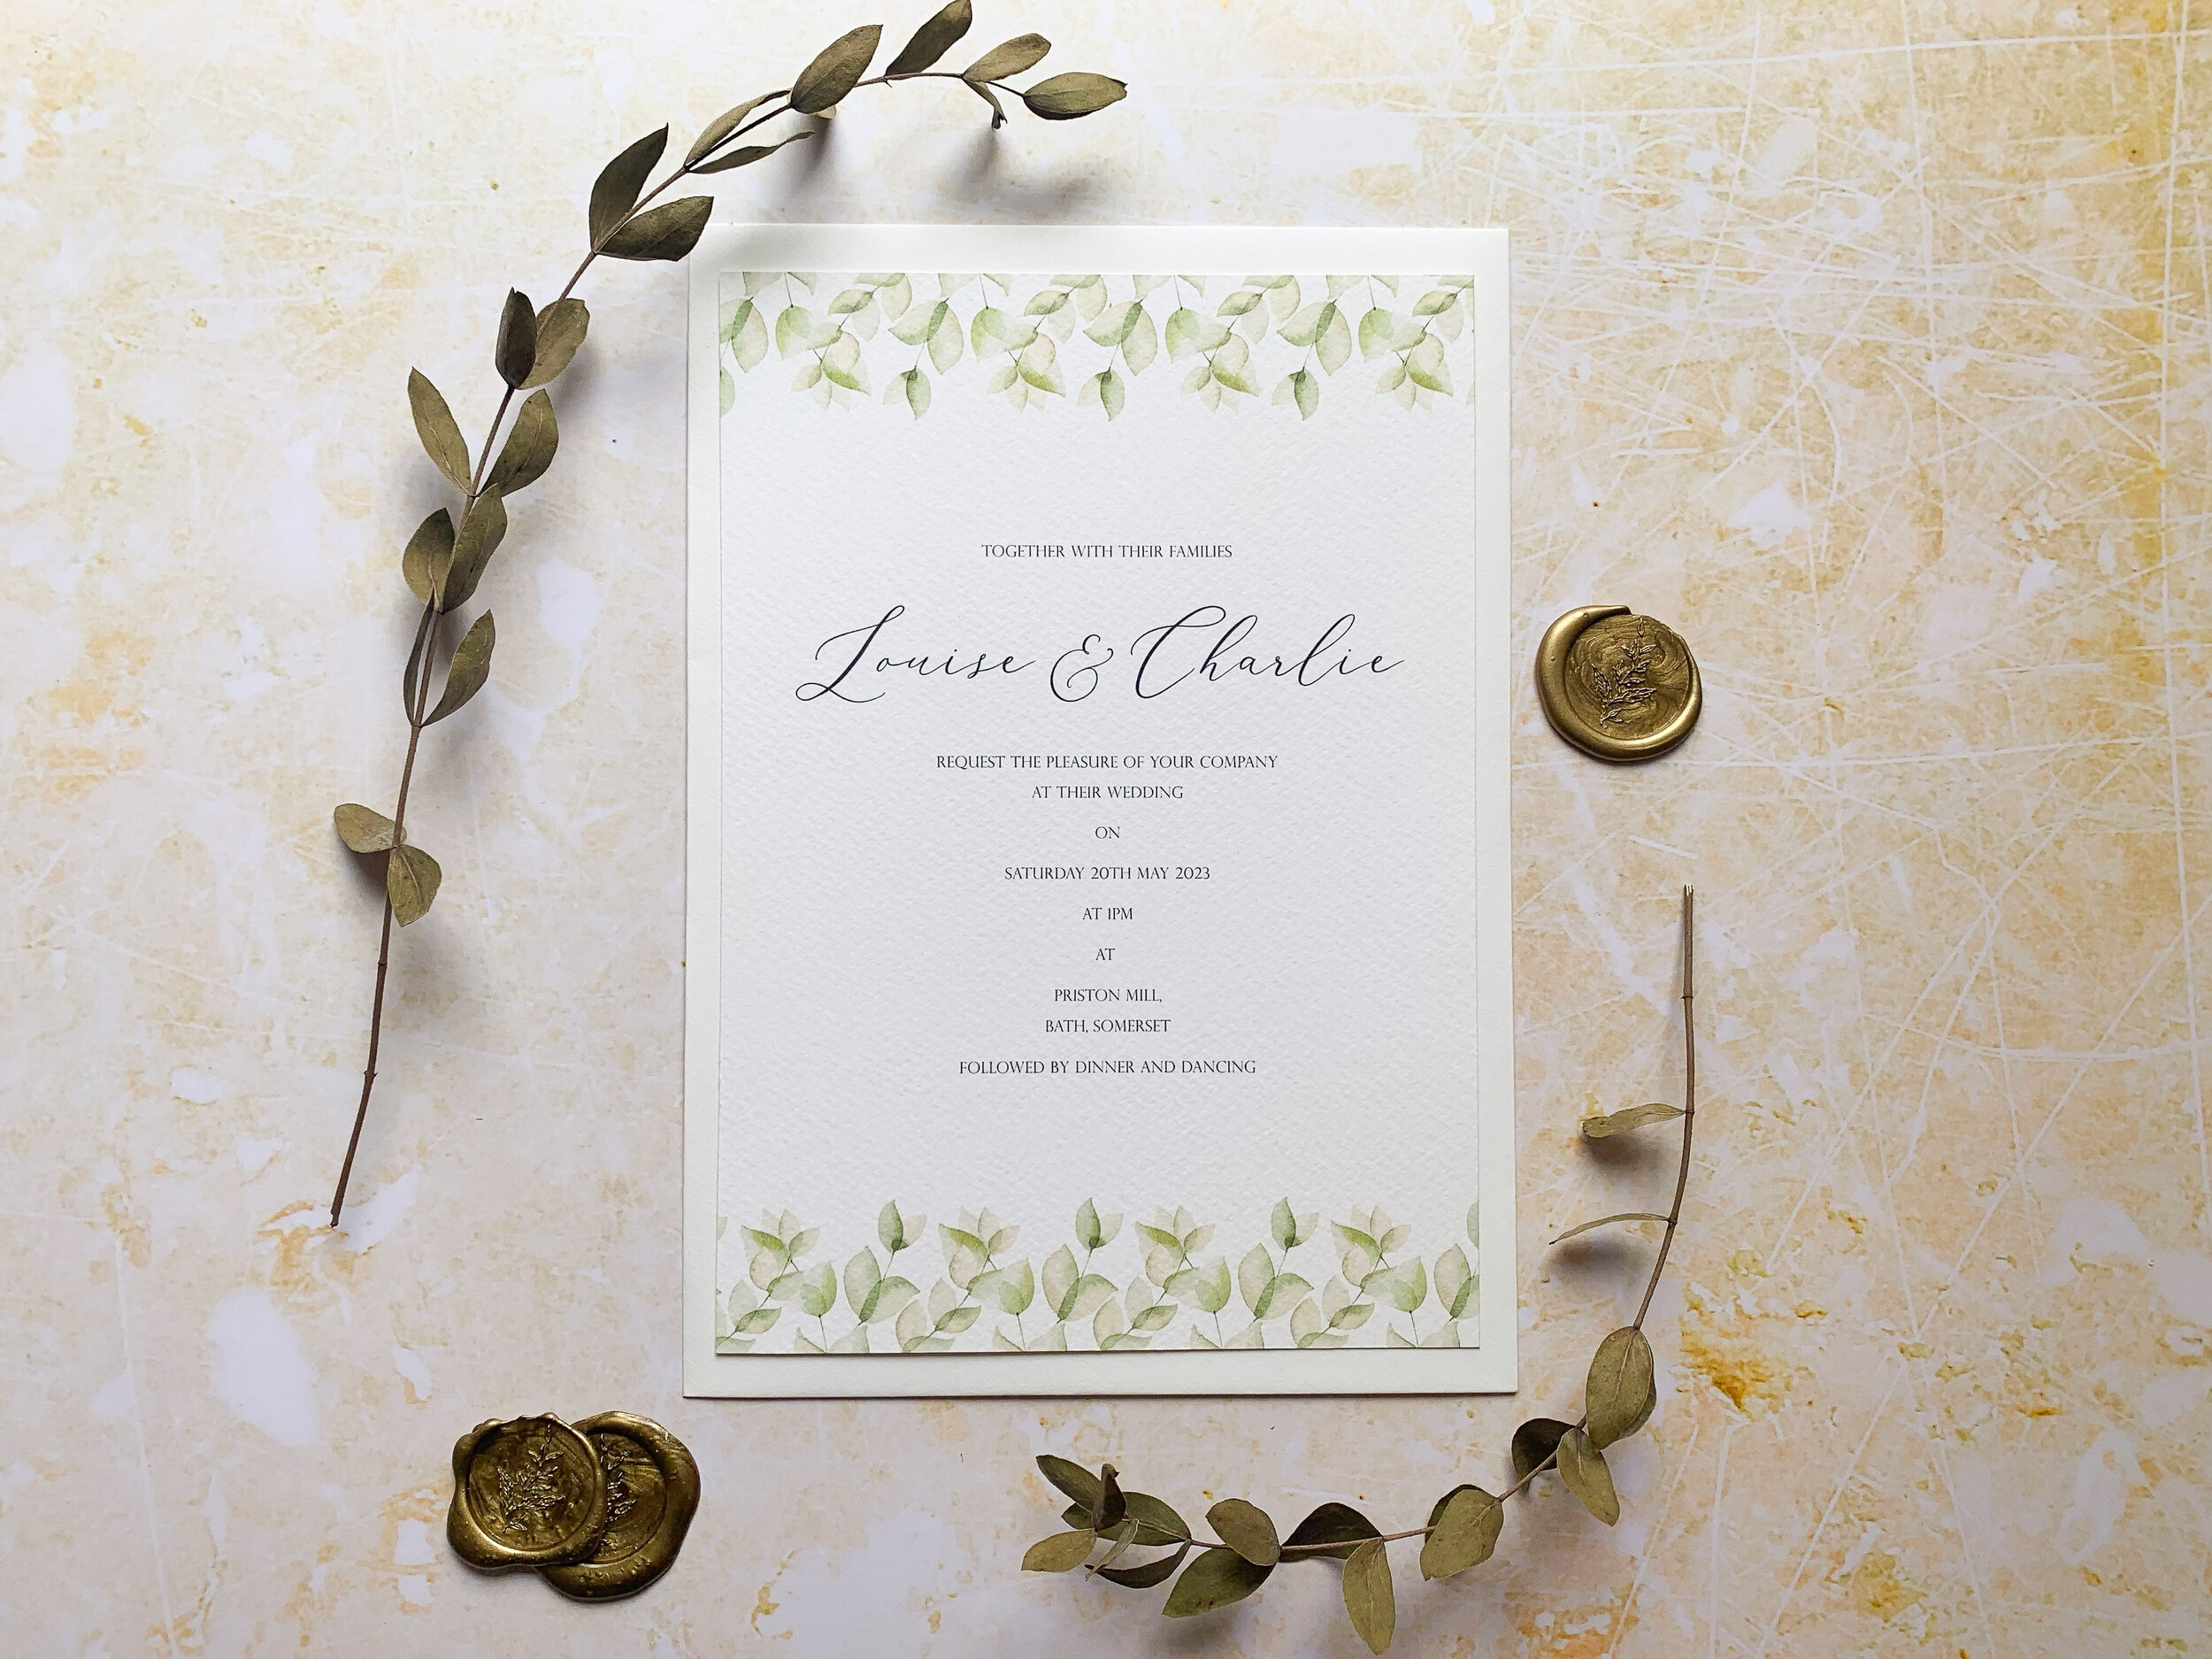 Golden hour wedding invitation.jpg